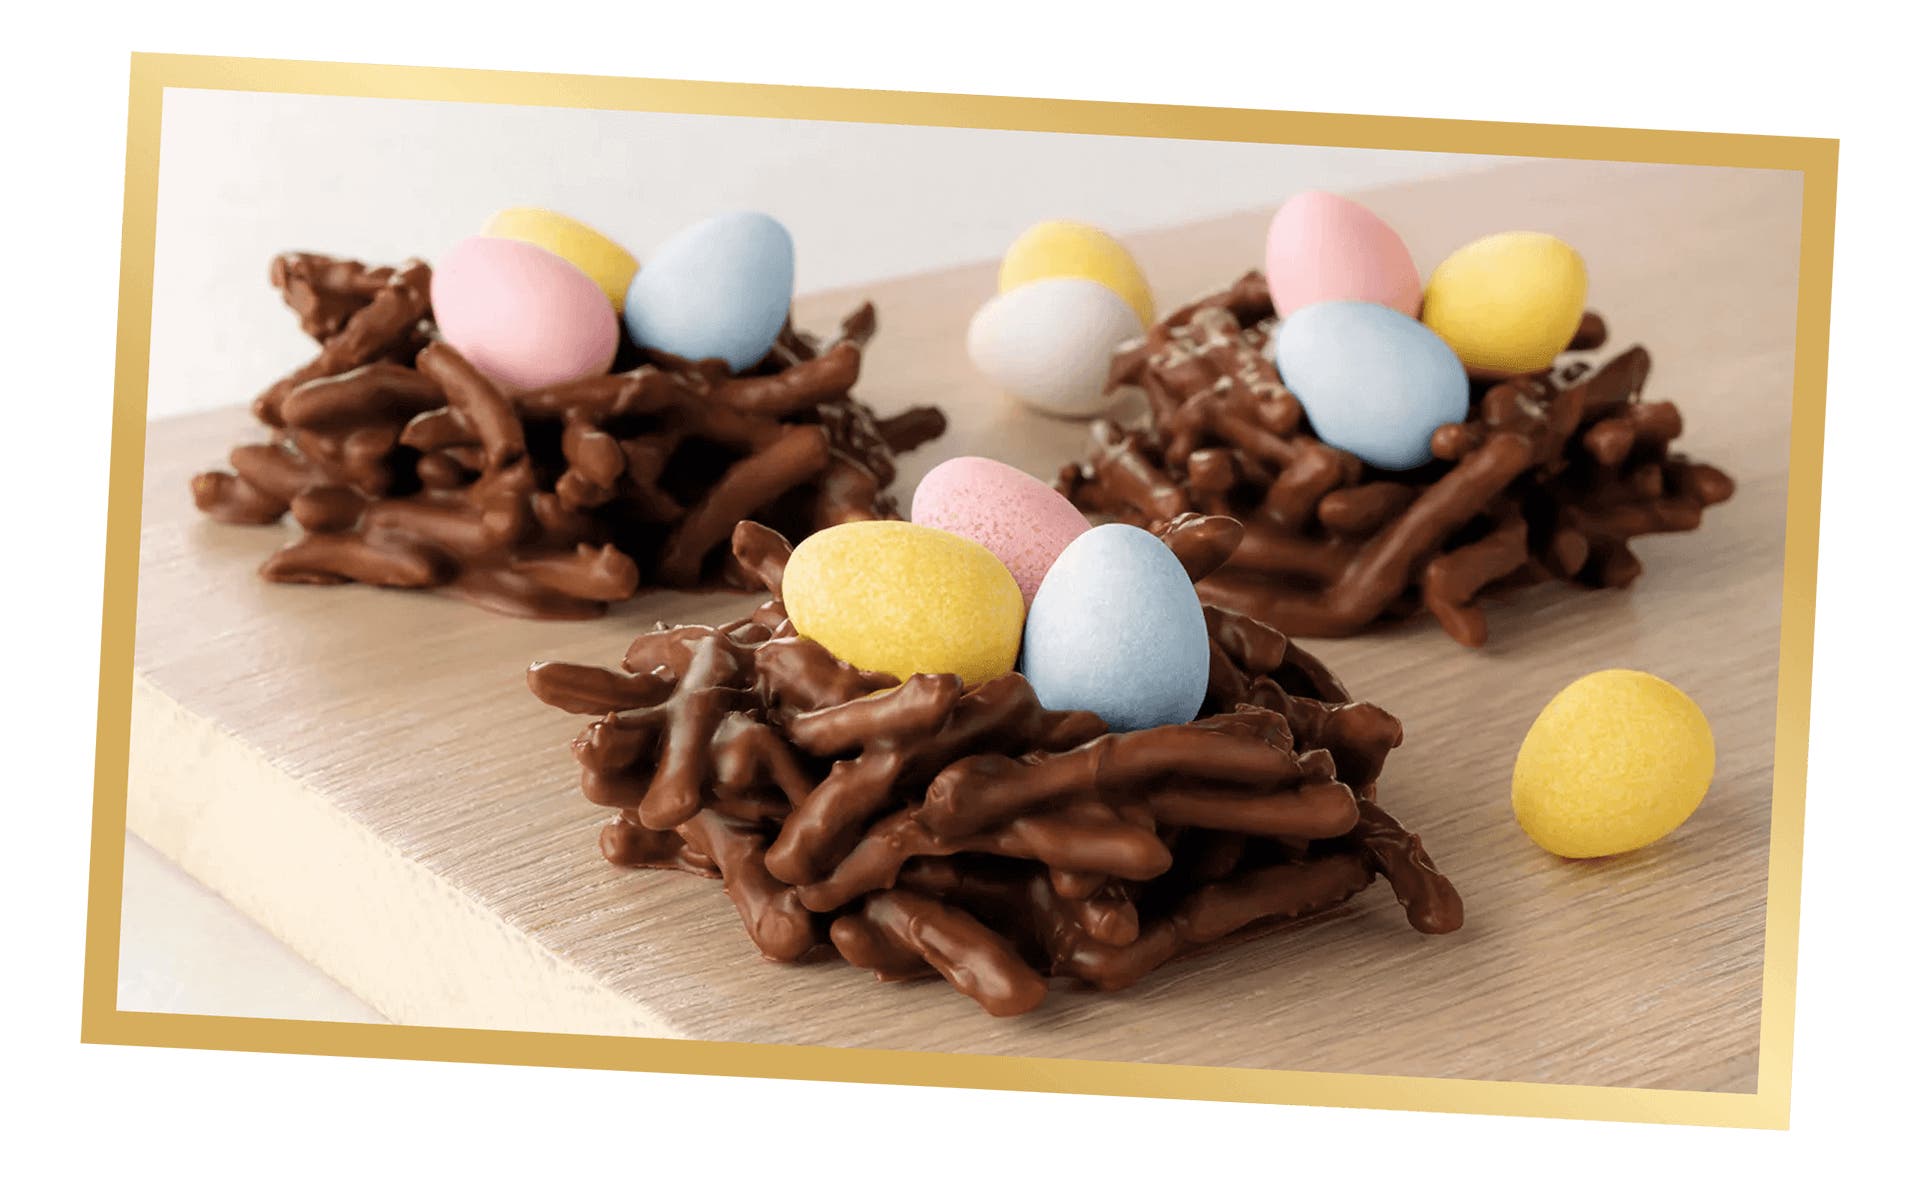 cadbury chocolate eggs in bird nests made of chocolate covered pretzels